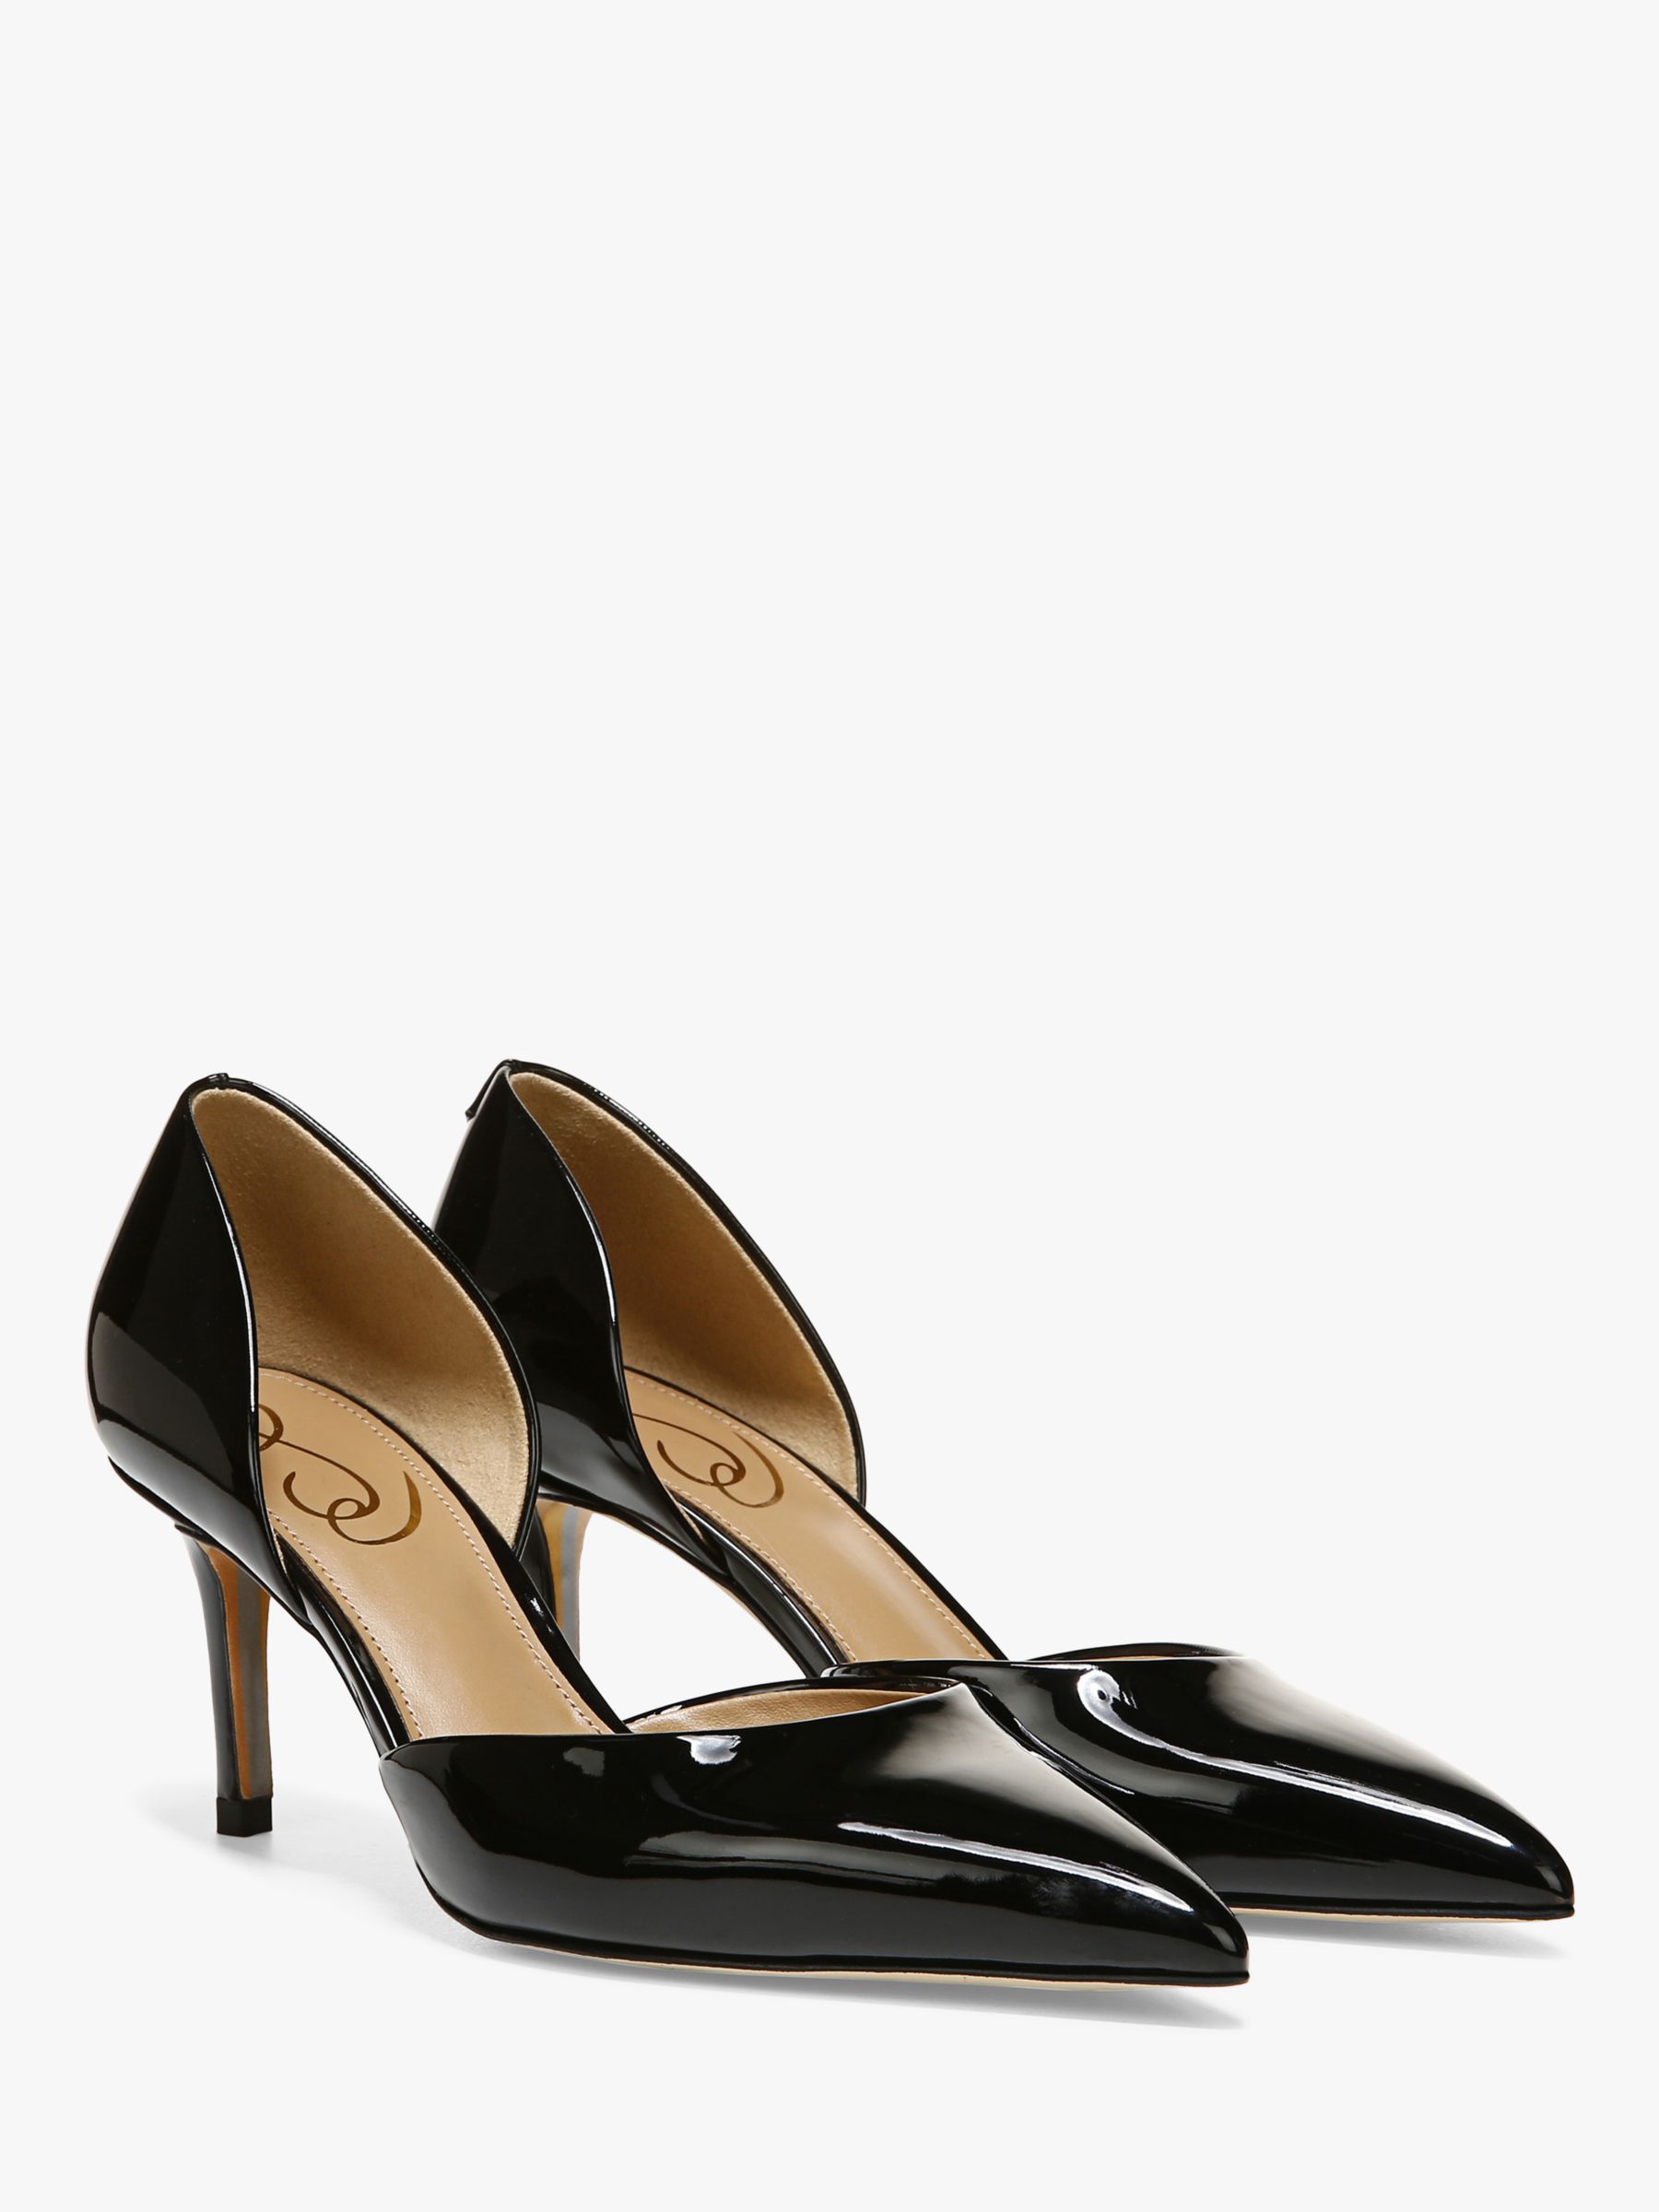 Sam Edelman Viv Stiletto Court Shoes, Black at John Lewis & Partners